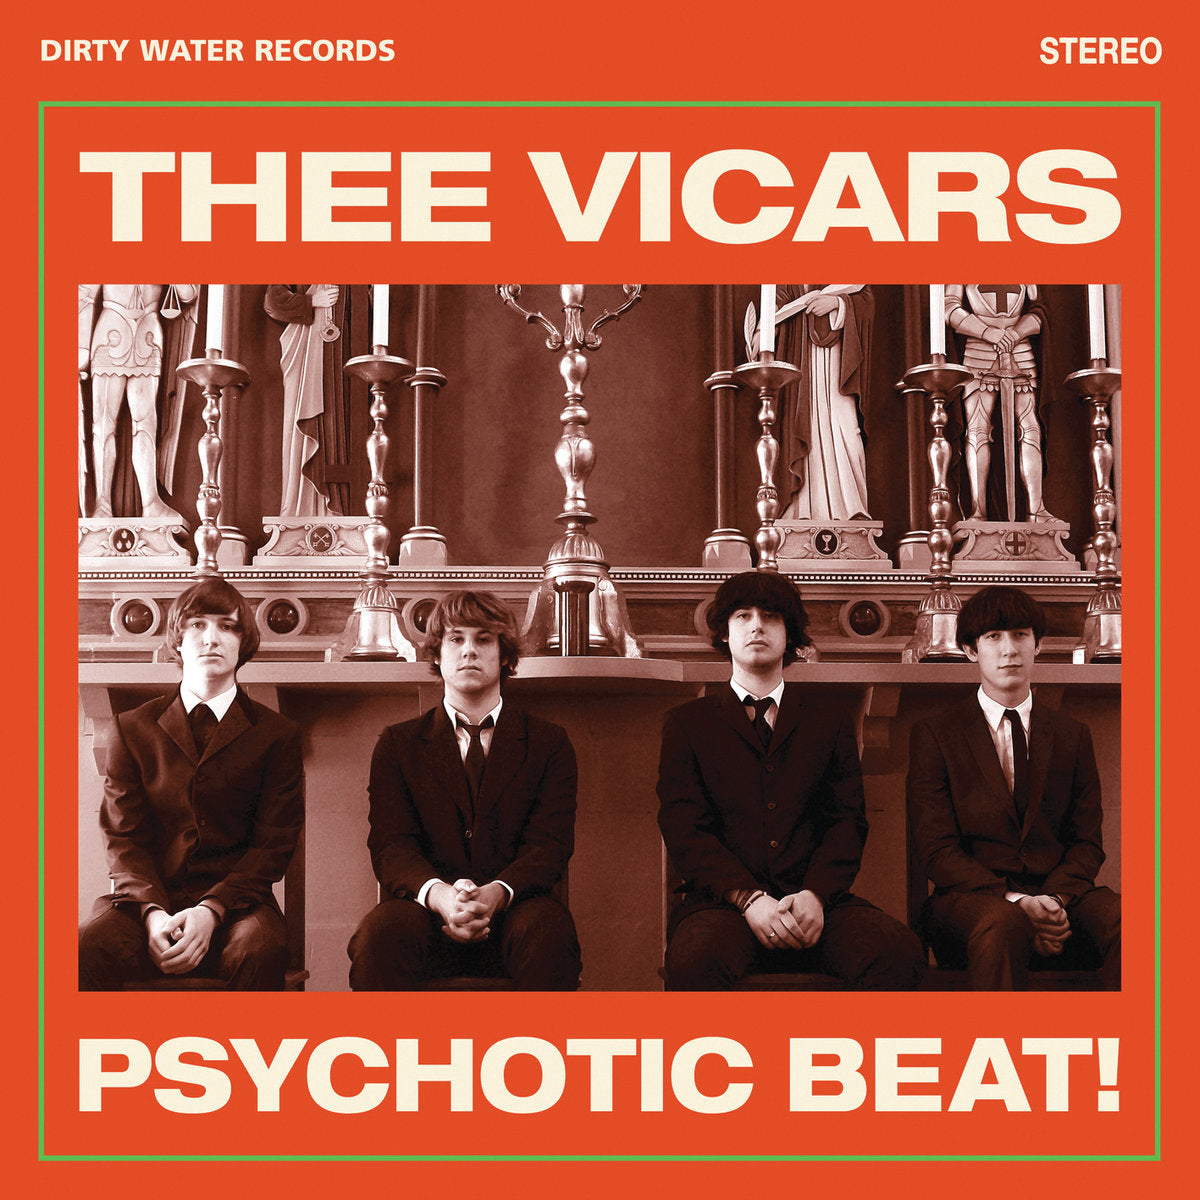 Thee Vicars- Psychotic Beat LP ~BILLY CHILDISH!